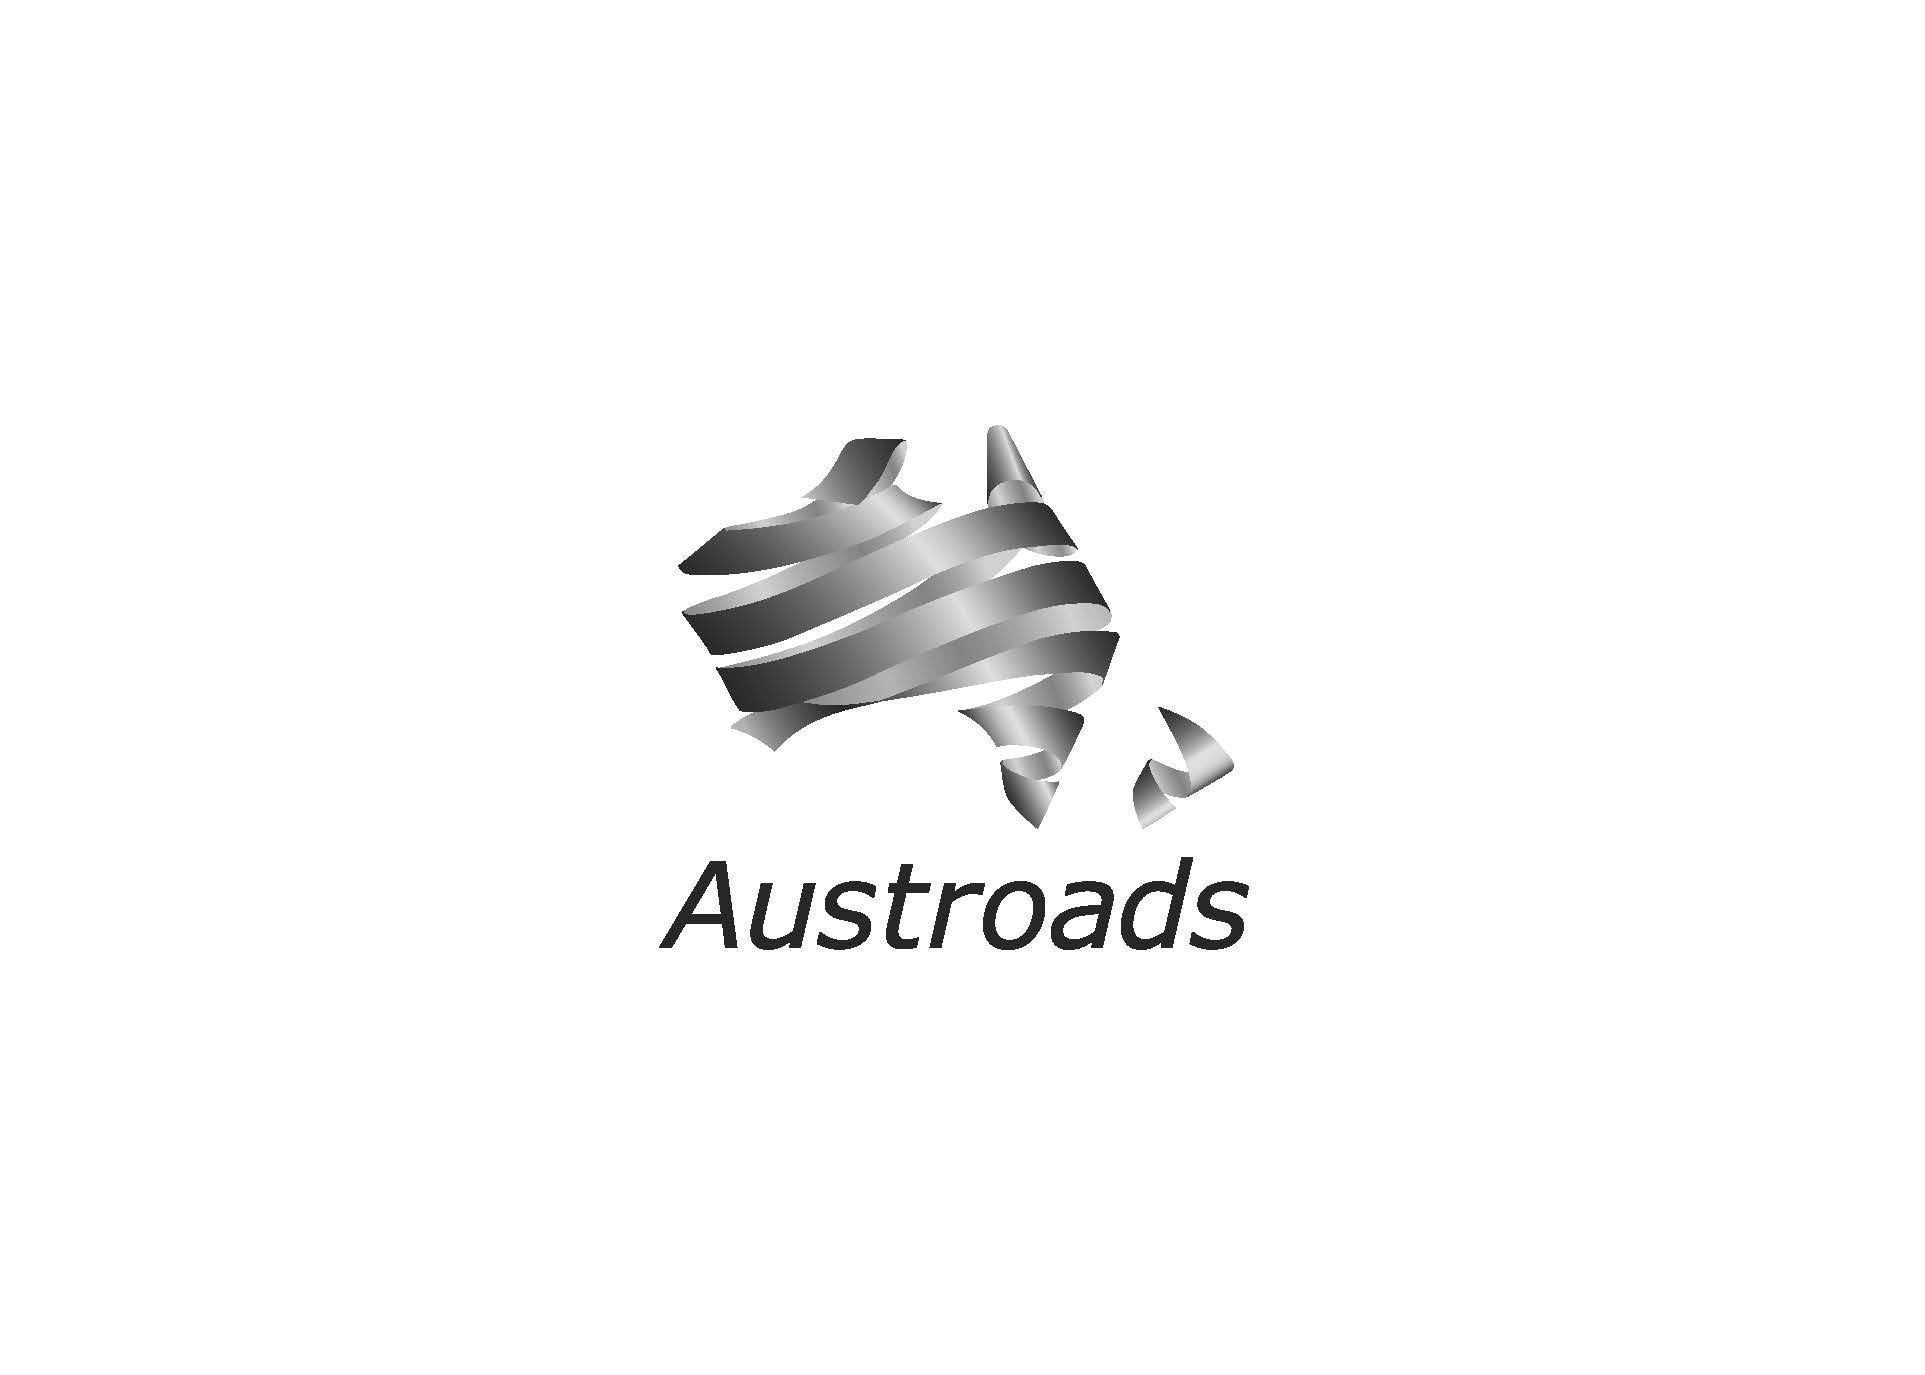 Austroads